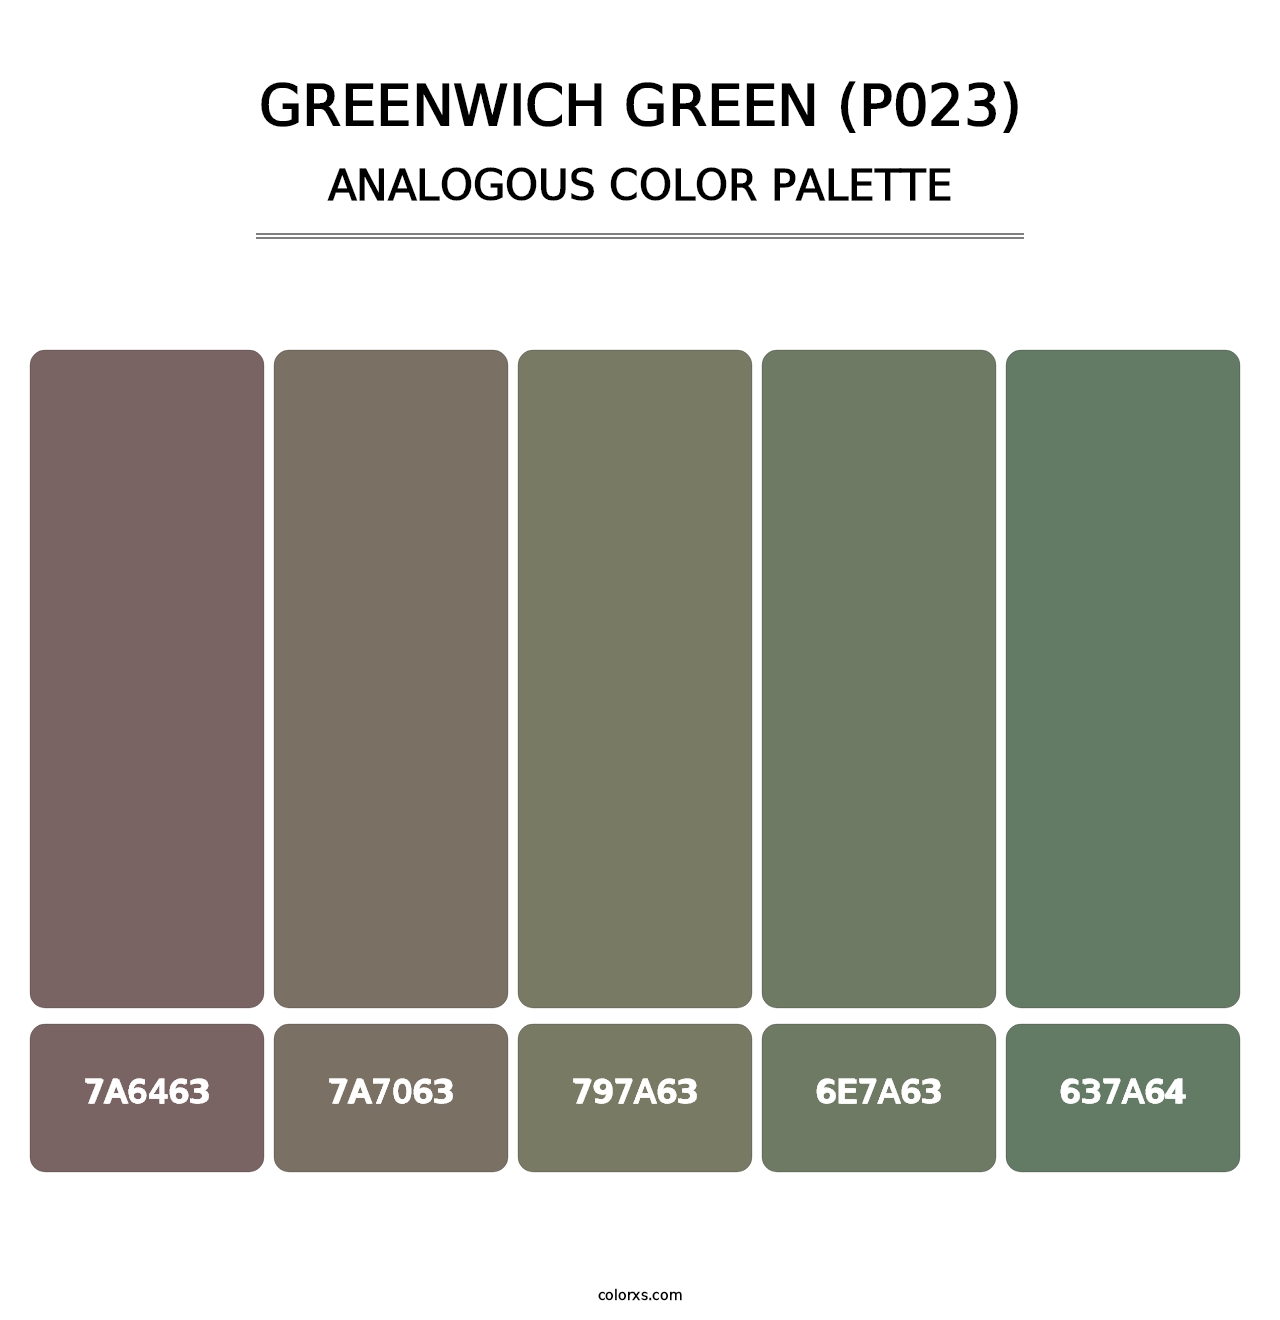 Greenwich Green (P023) - Analogous Color Palette